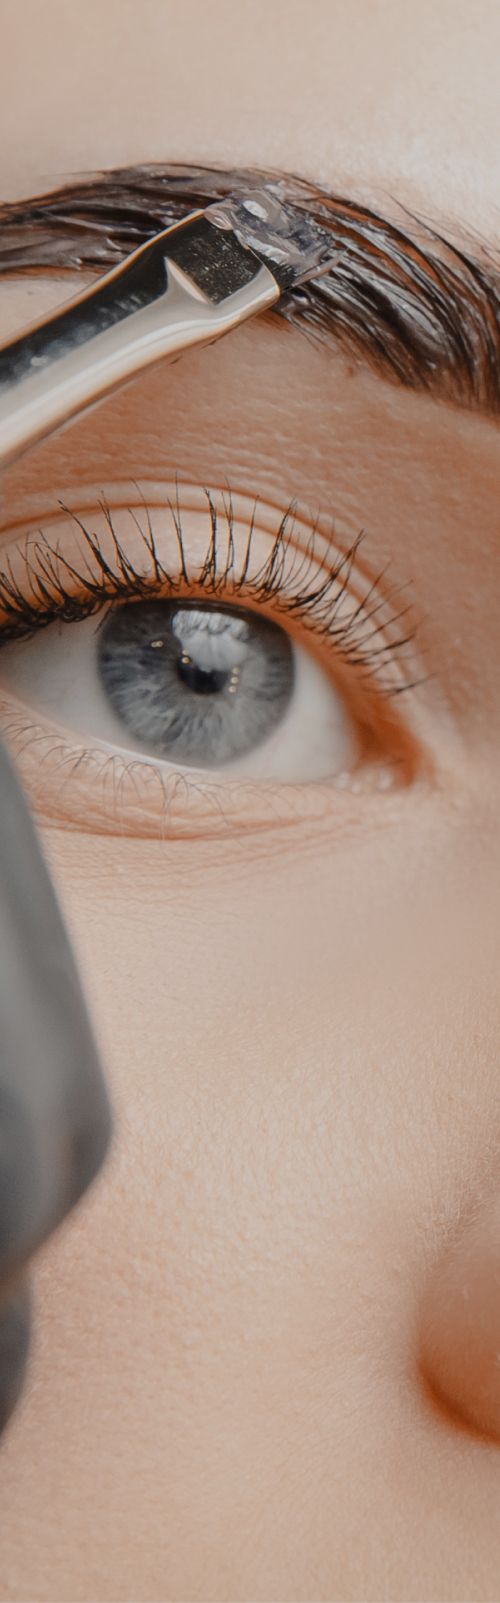 close up of eye brow tinting